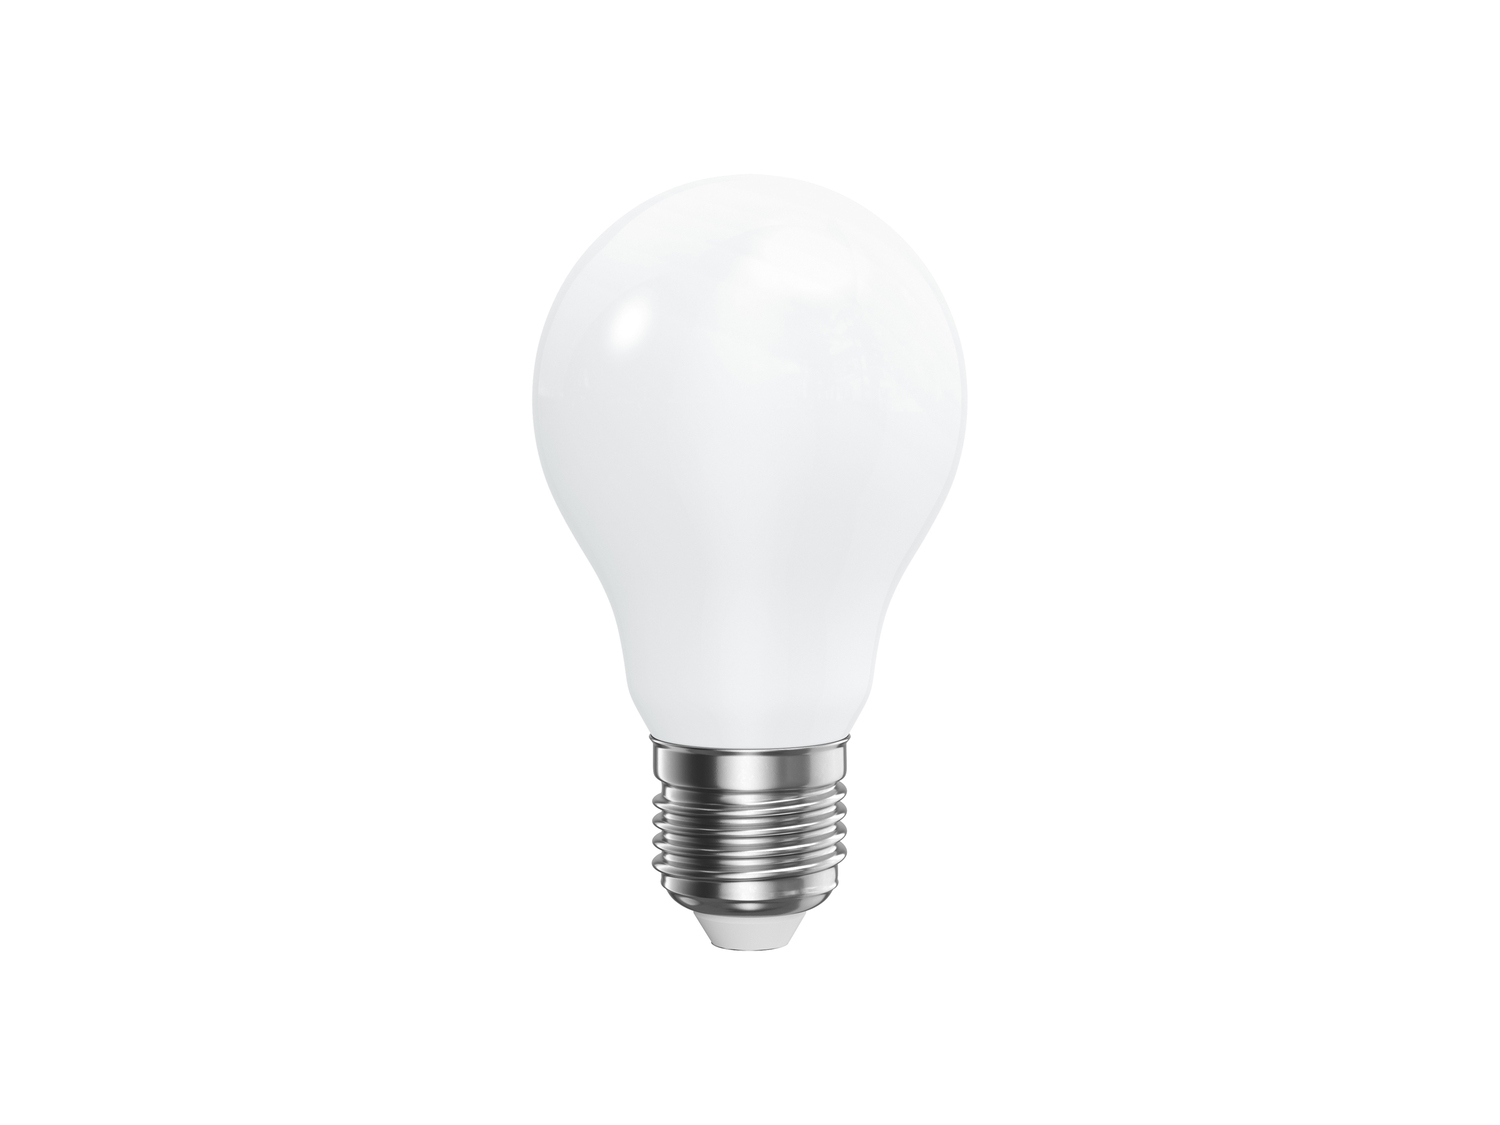 Lampadina LED a filamento 4,7 W o 8 W Livarno, prezzo 2.99 € 
1 o 2 pezzi 
- ...